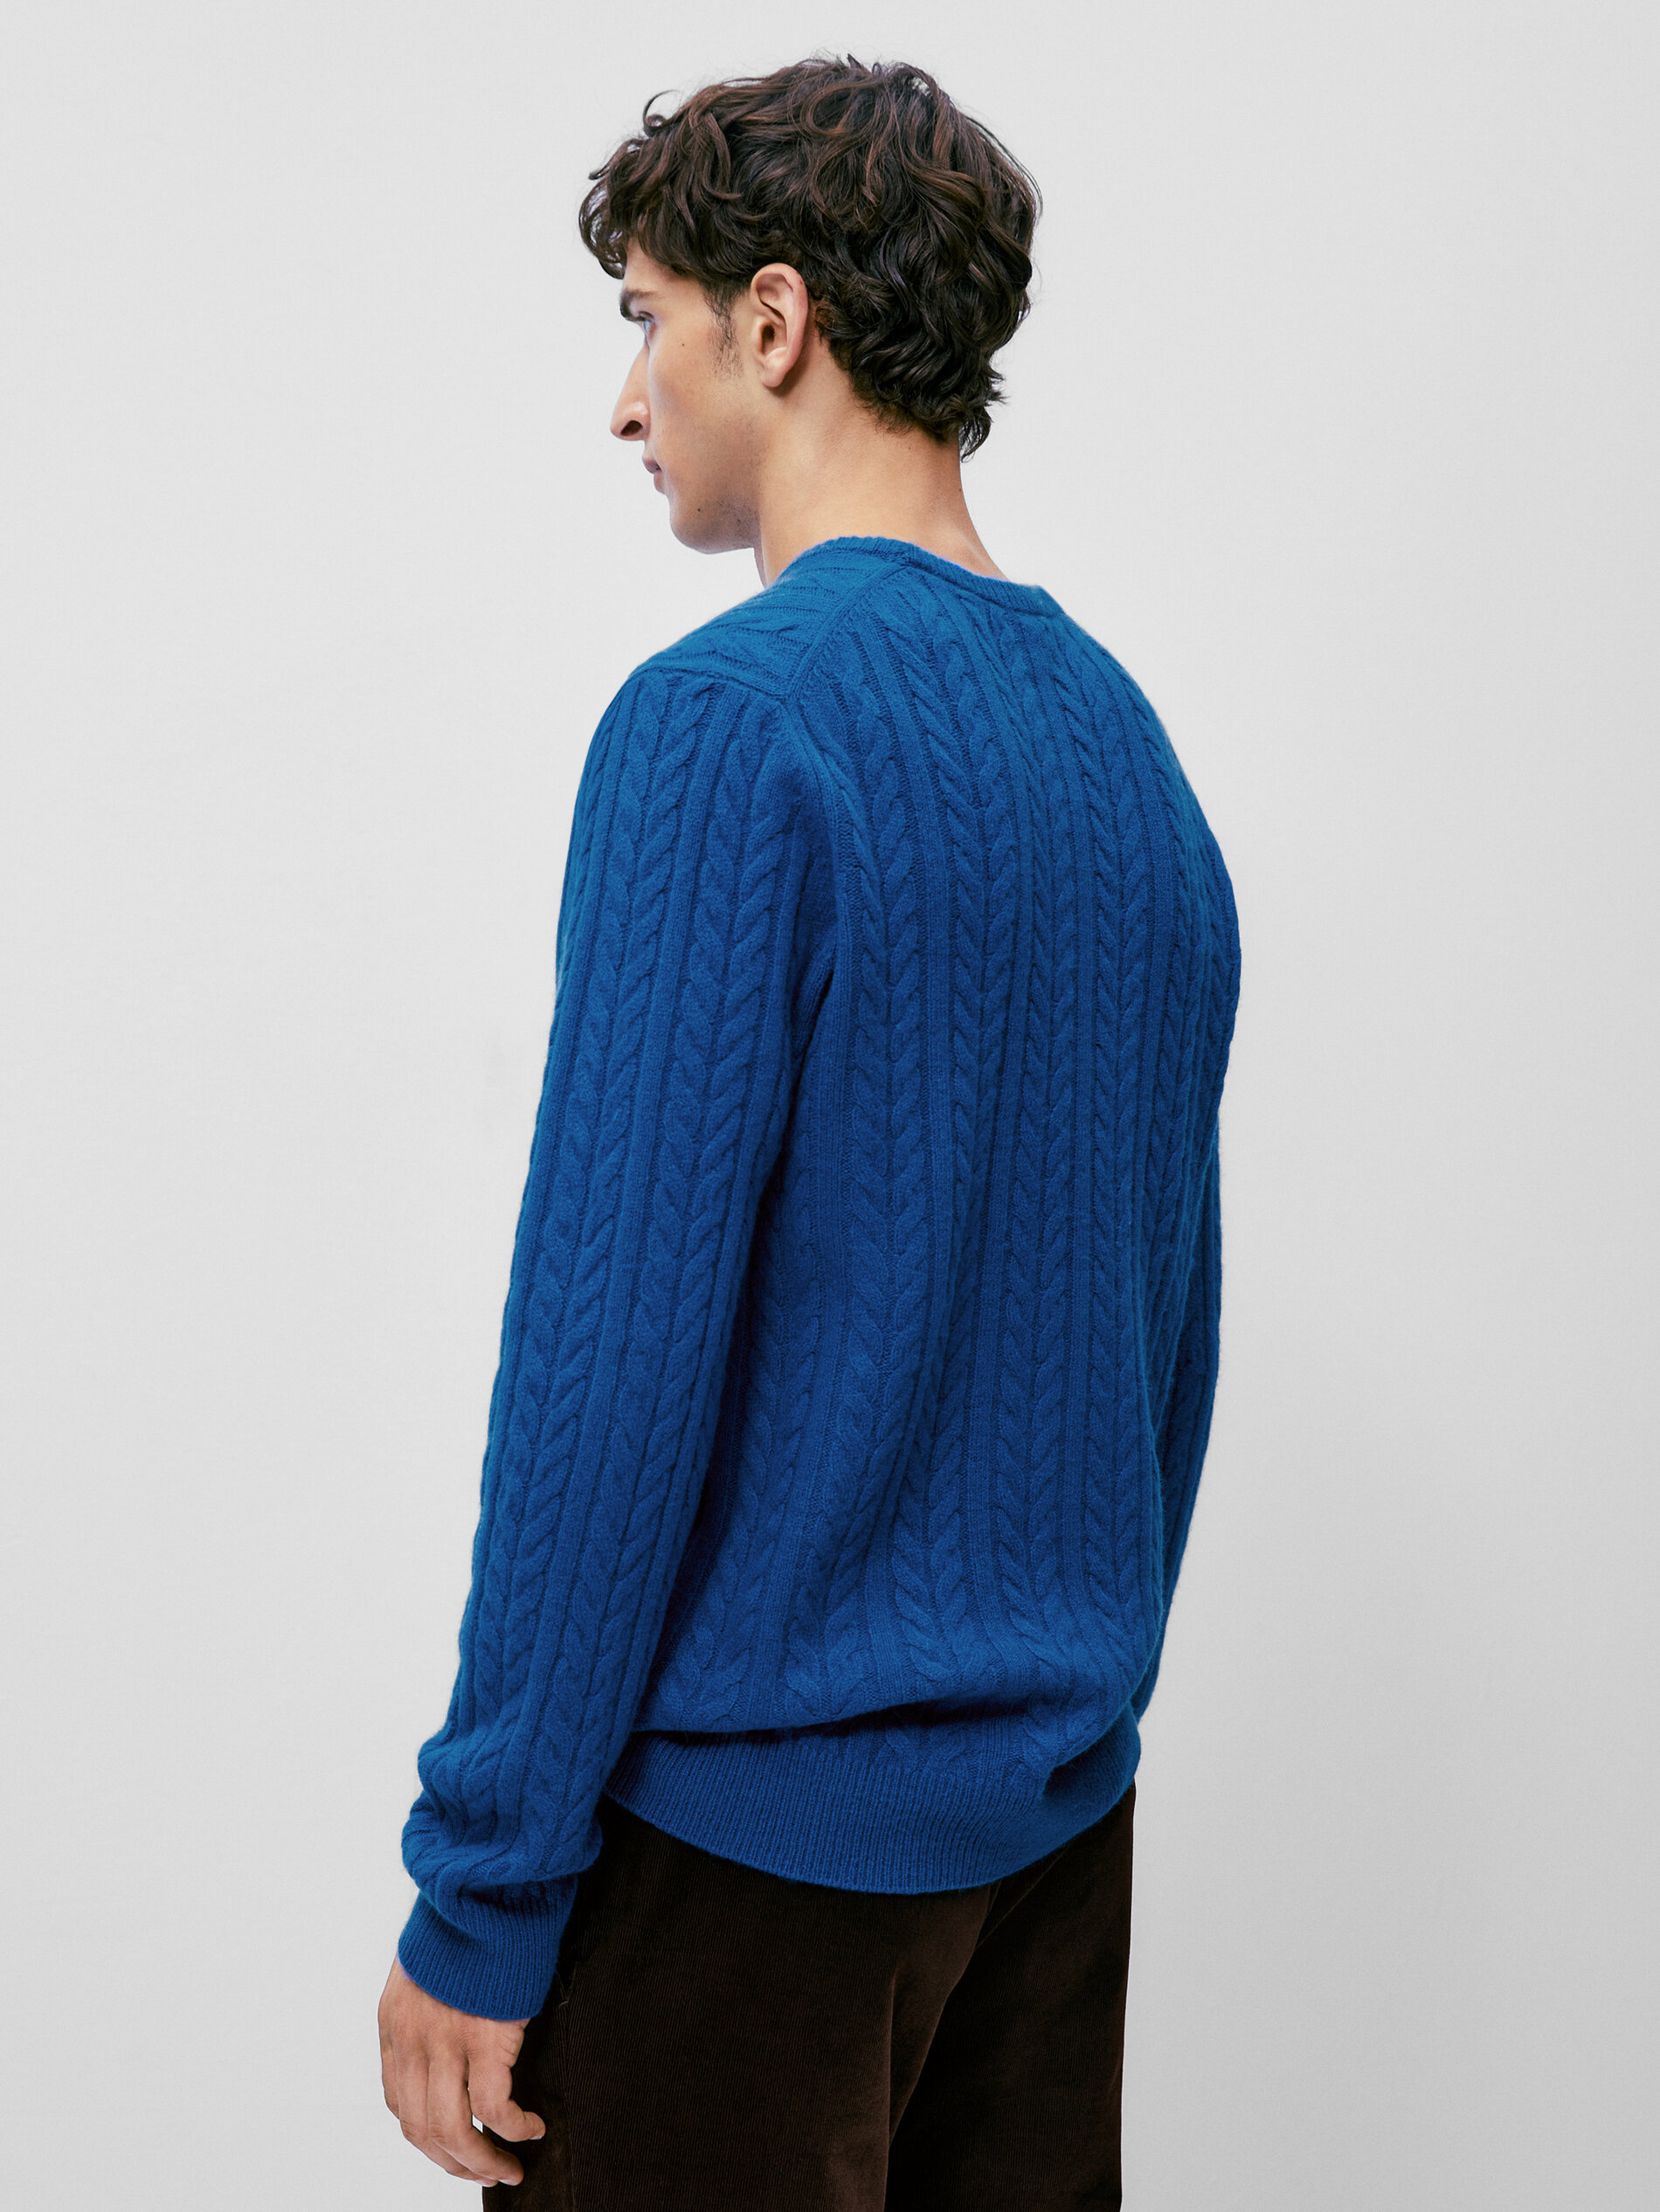 Massimo Dutti Wollen trui blauw gestippeld casual uitstraling Mode Sweaters Wollen truien 